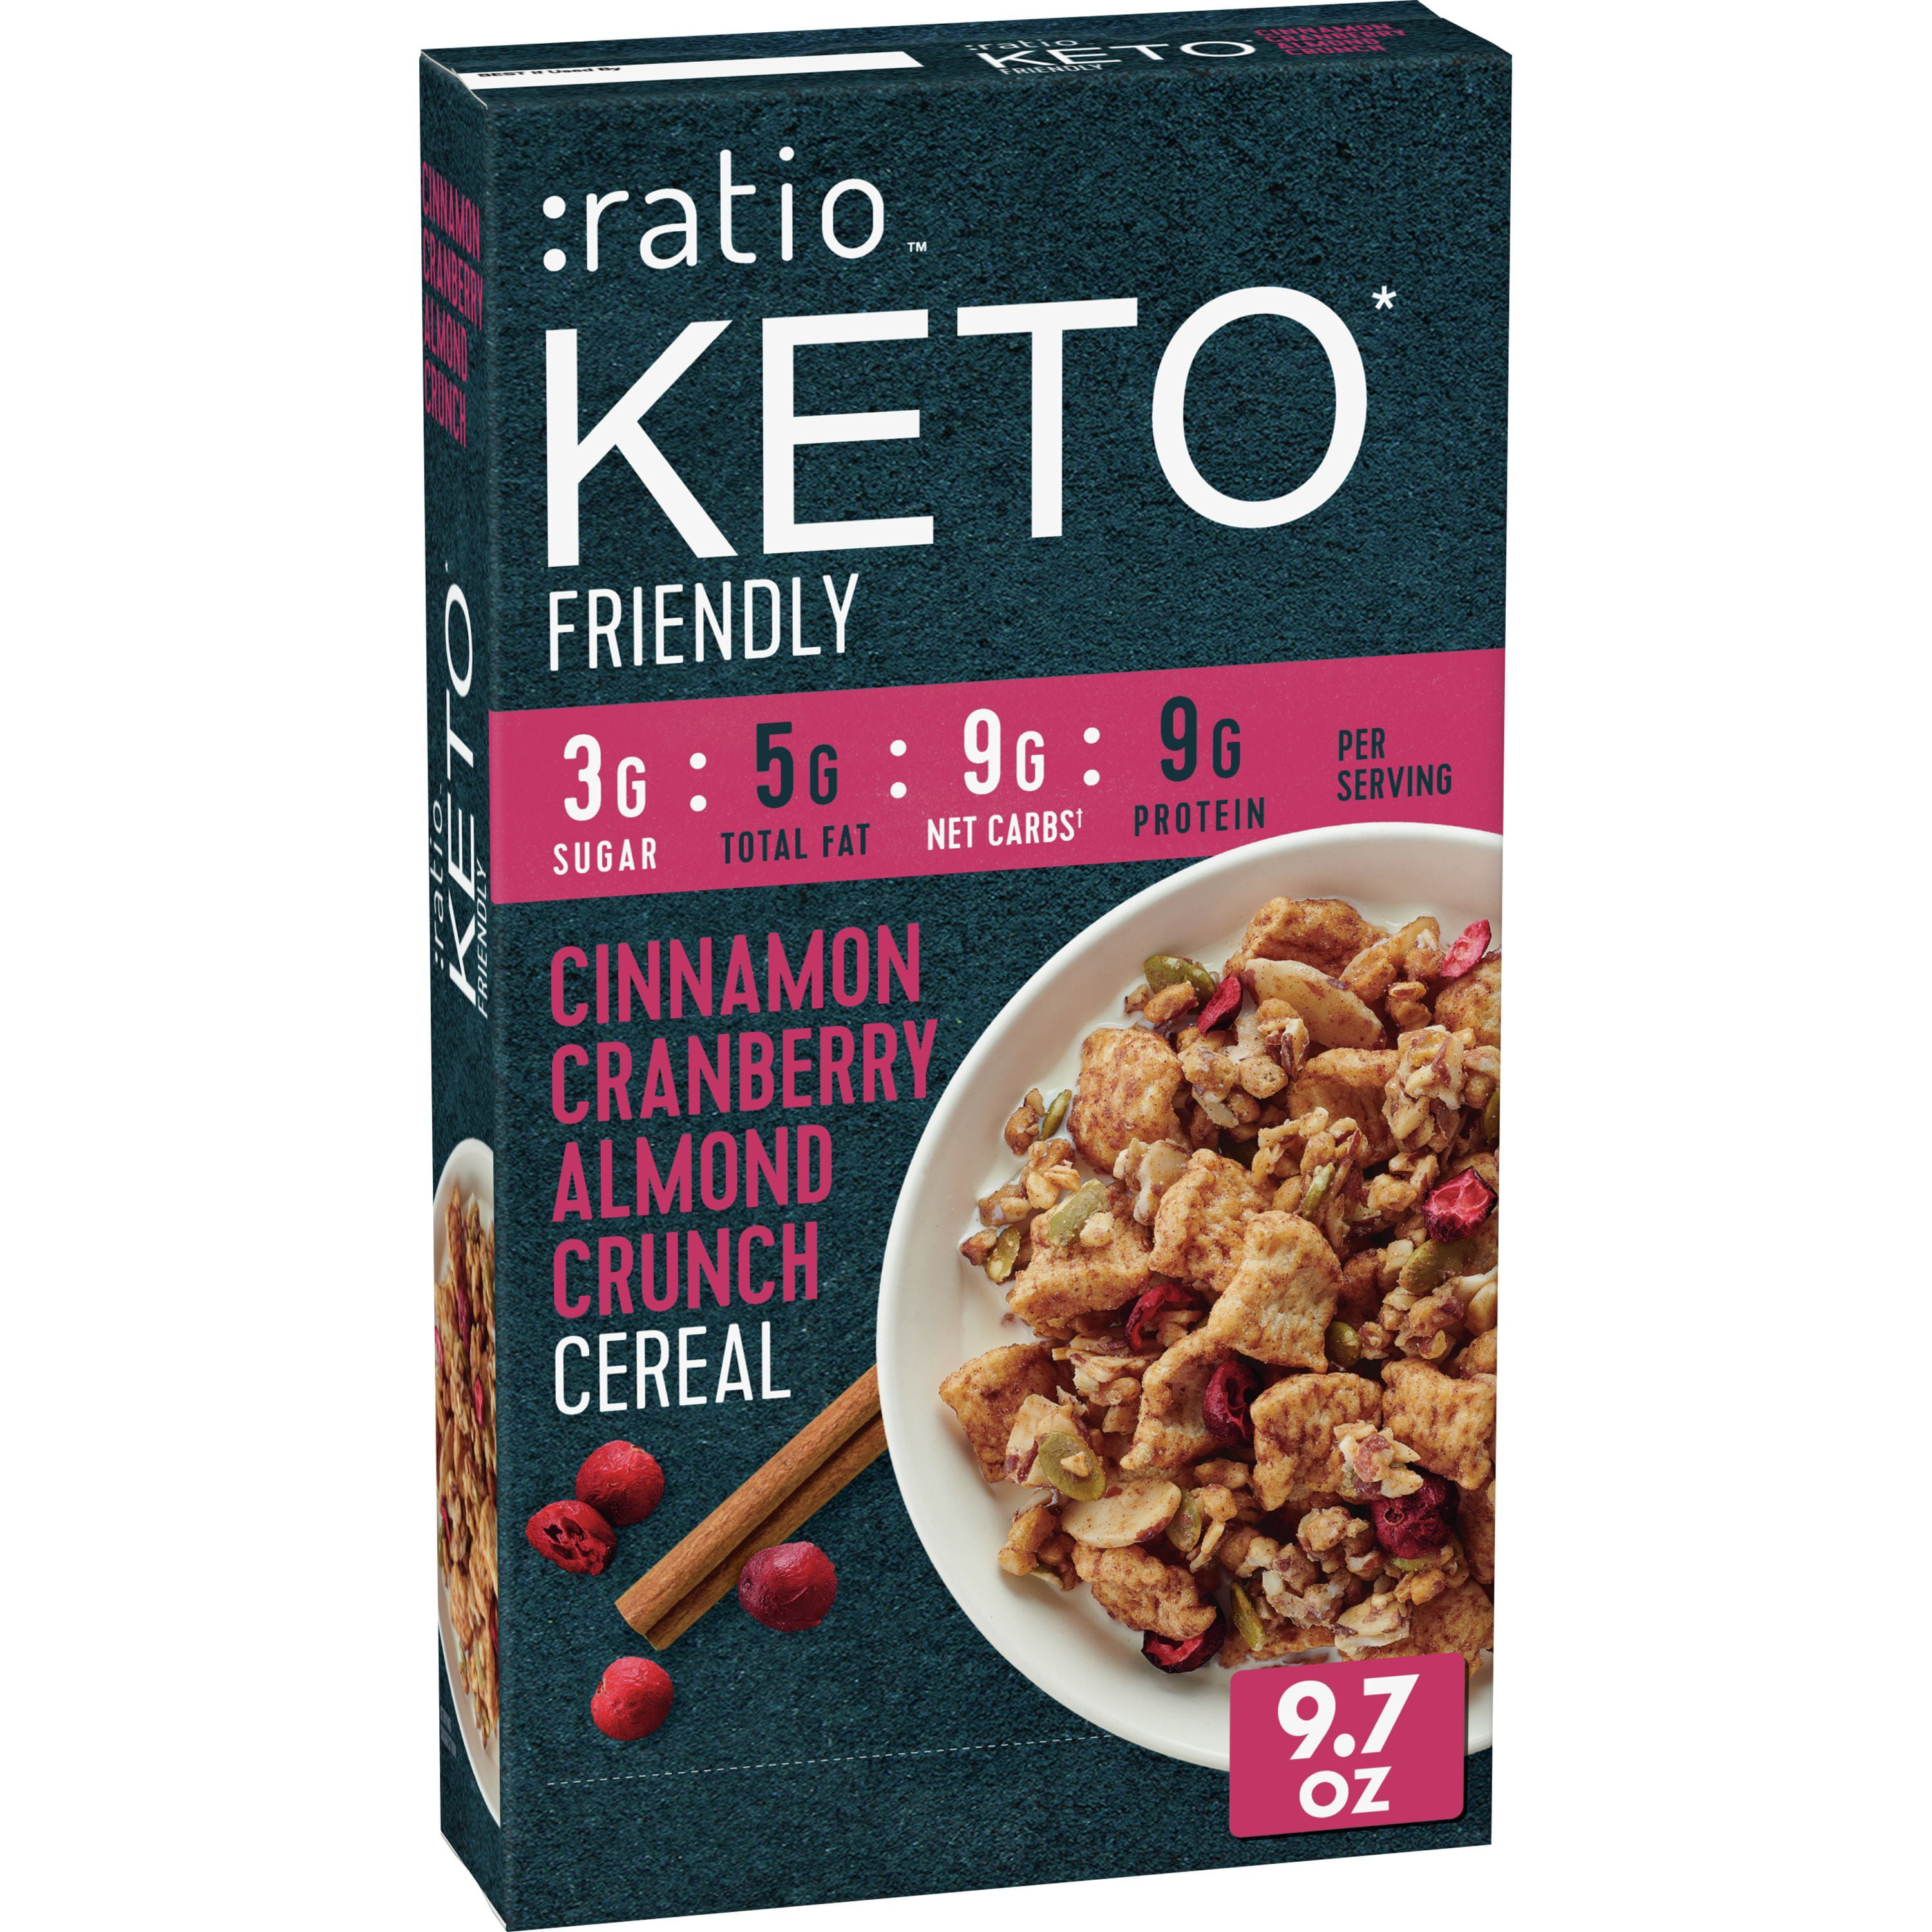 :ratio KETO* Friendly Cereal Cinnamon Cranberry Almond Crunch